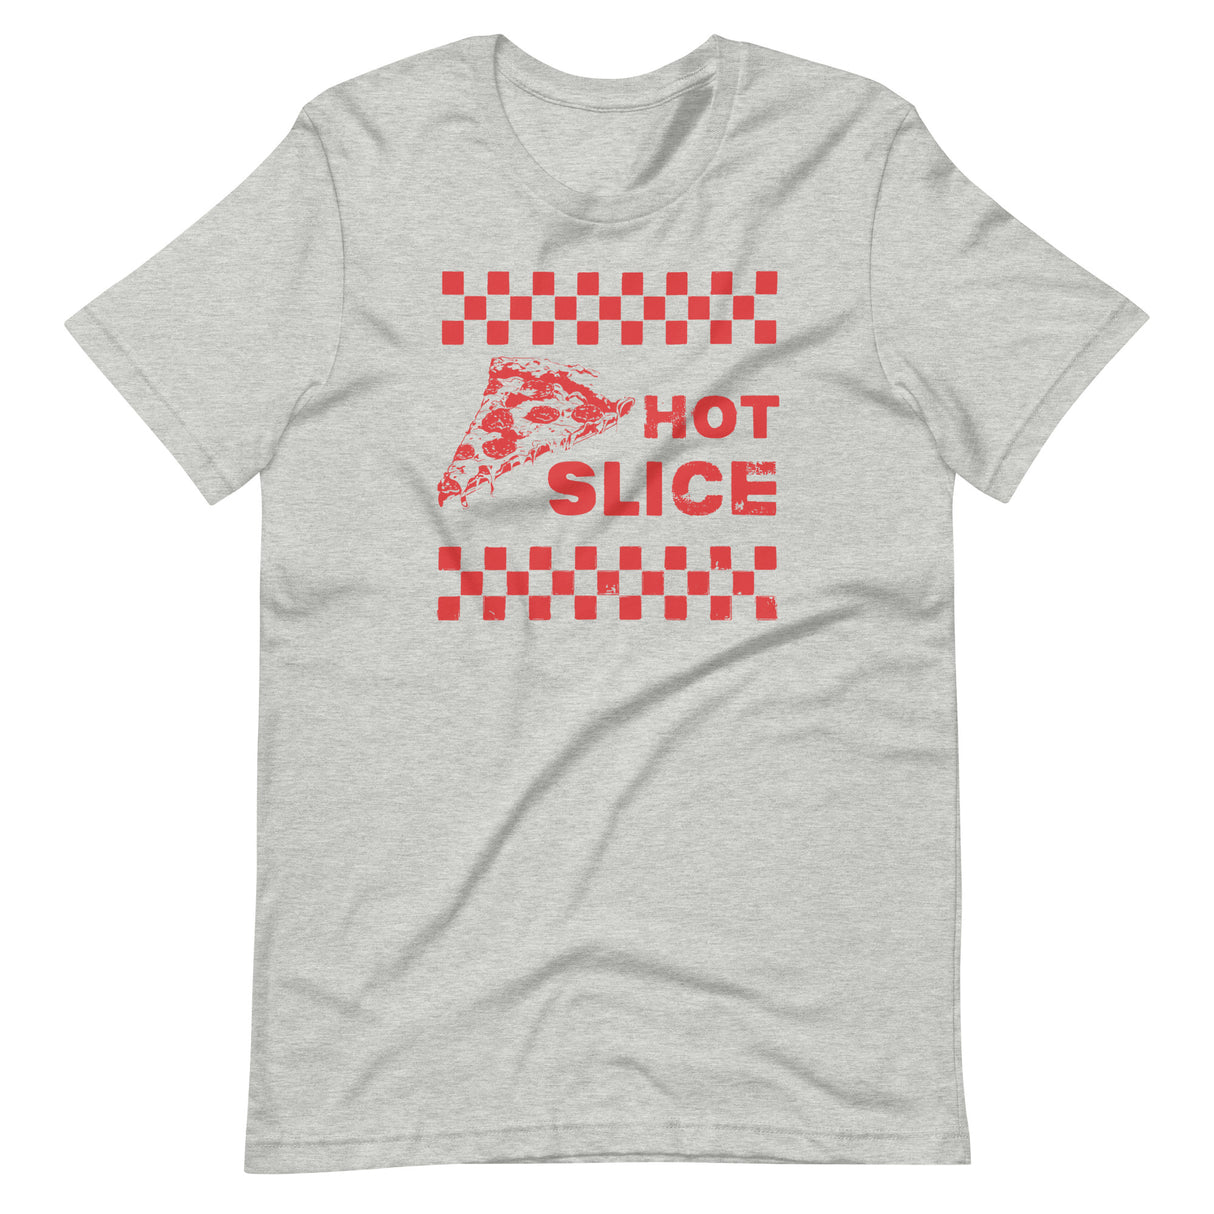 Hot Slice Pizza Box Shirt